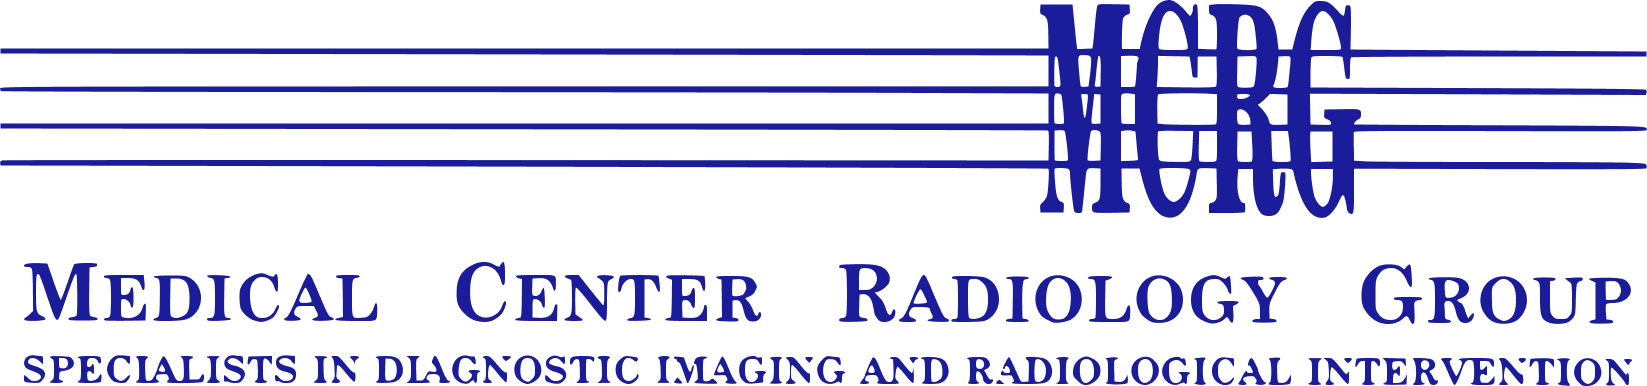 Logo for Medical Center Radiology Group.